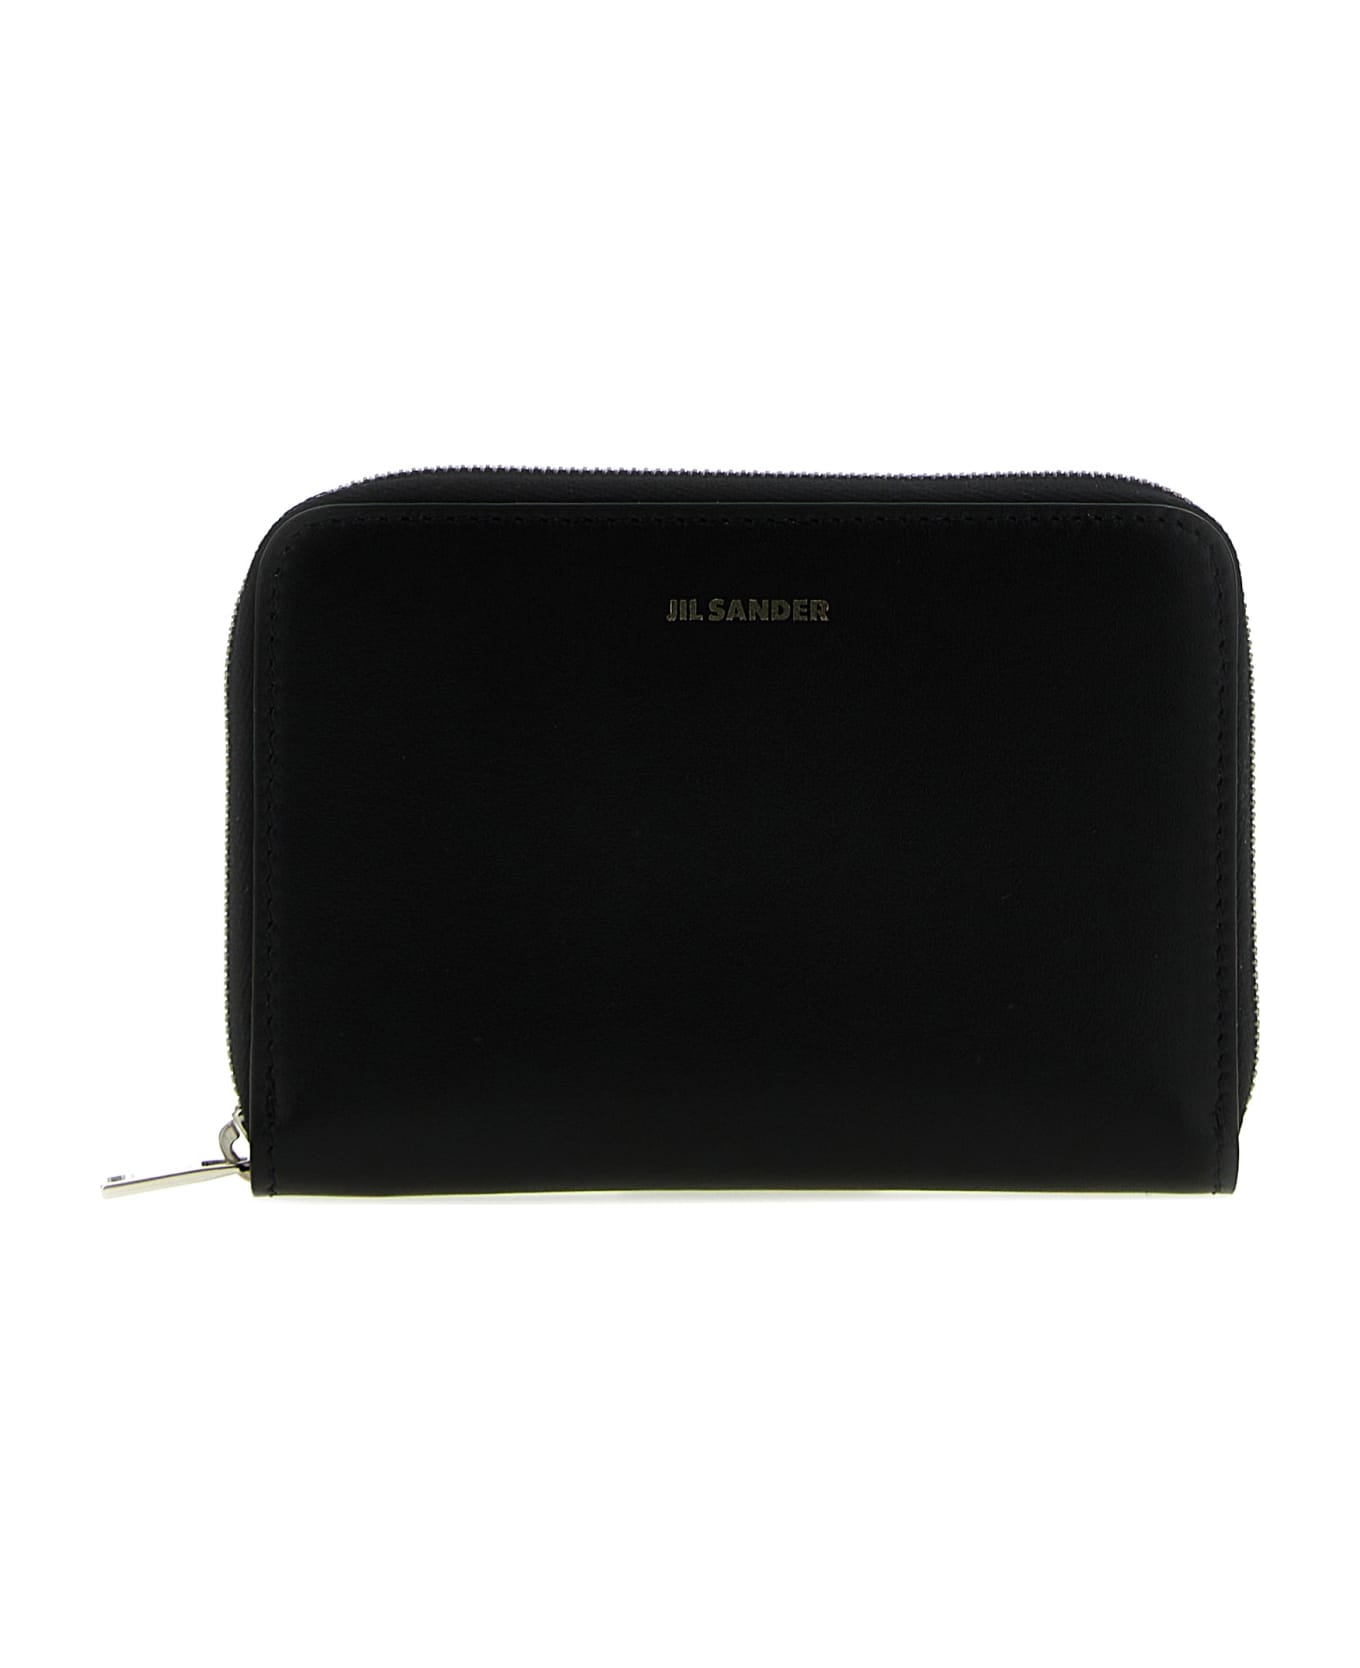 Jil Sander Zip Leather Wallet - Black  